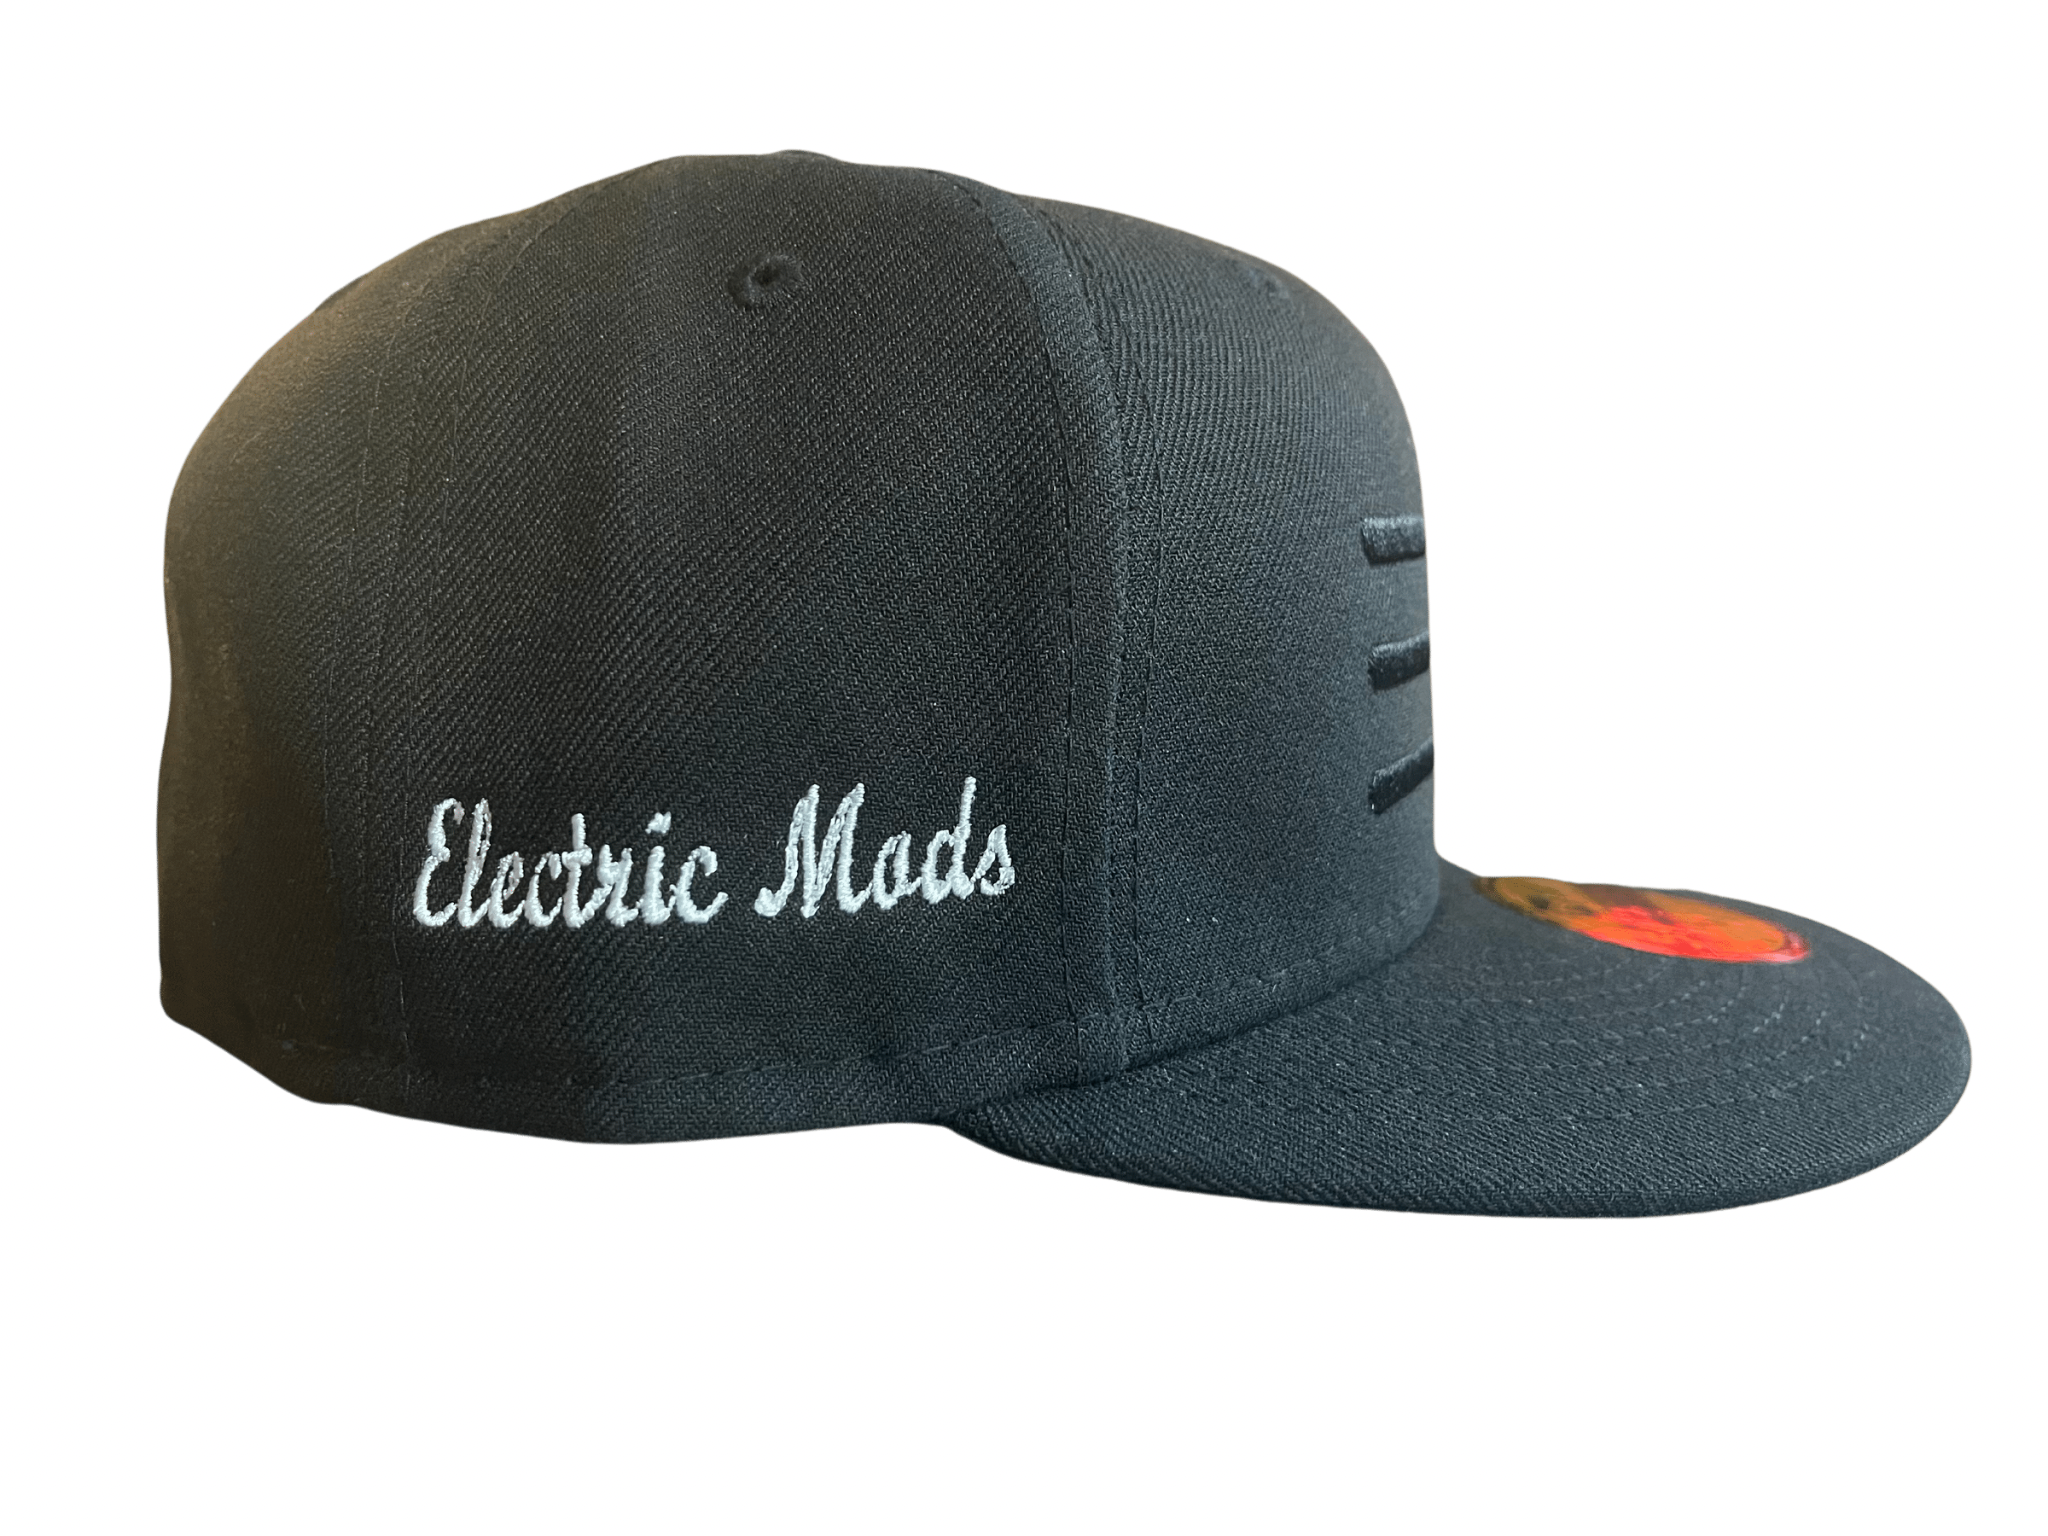 Electric Mods NEW ERA 9FIFTY- Black